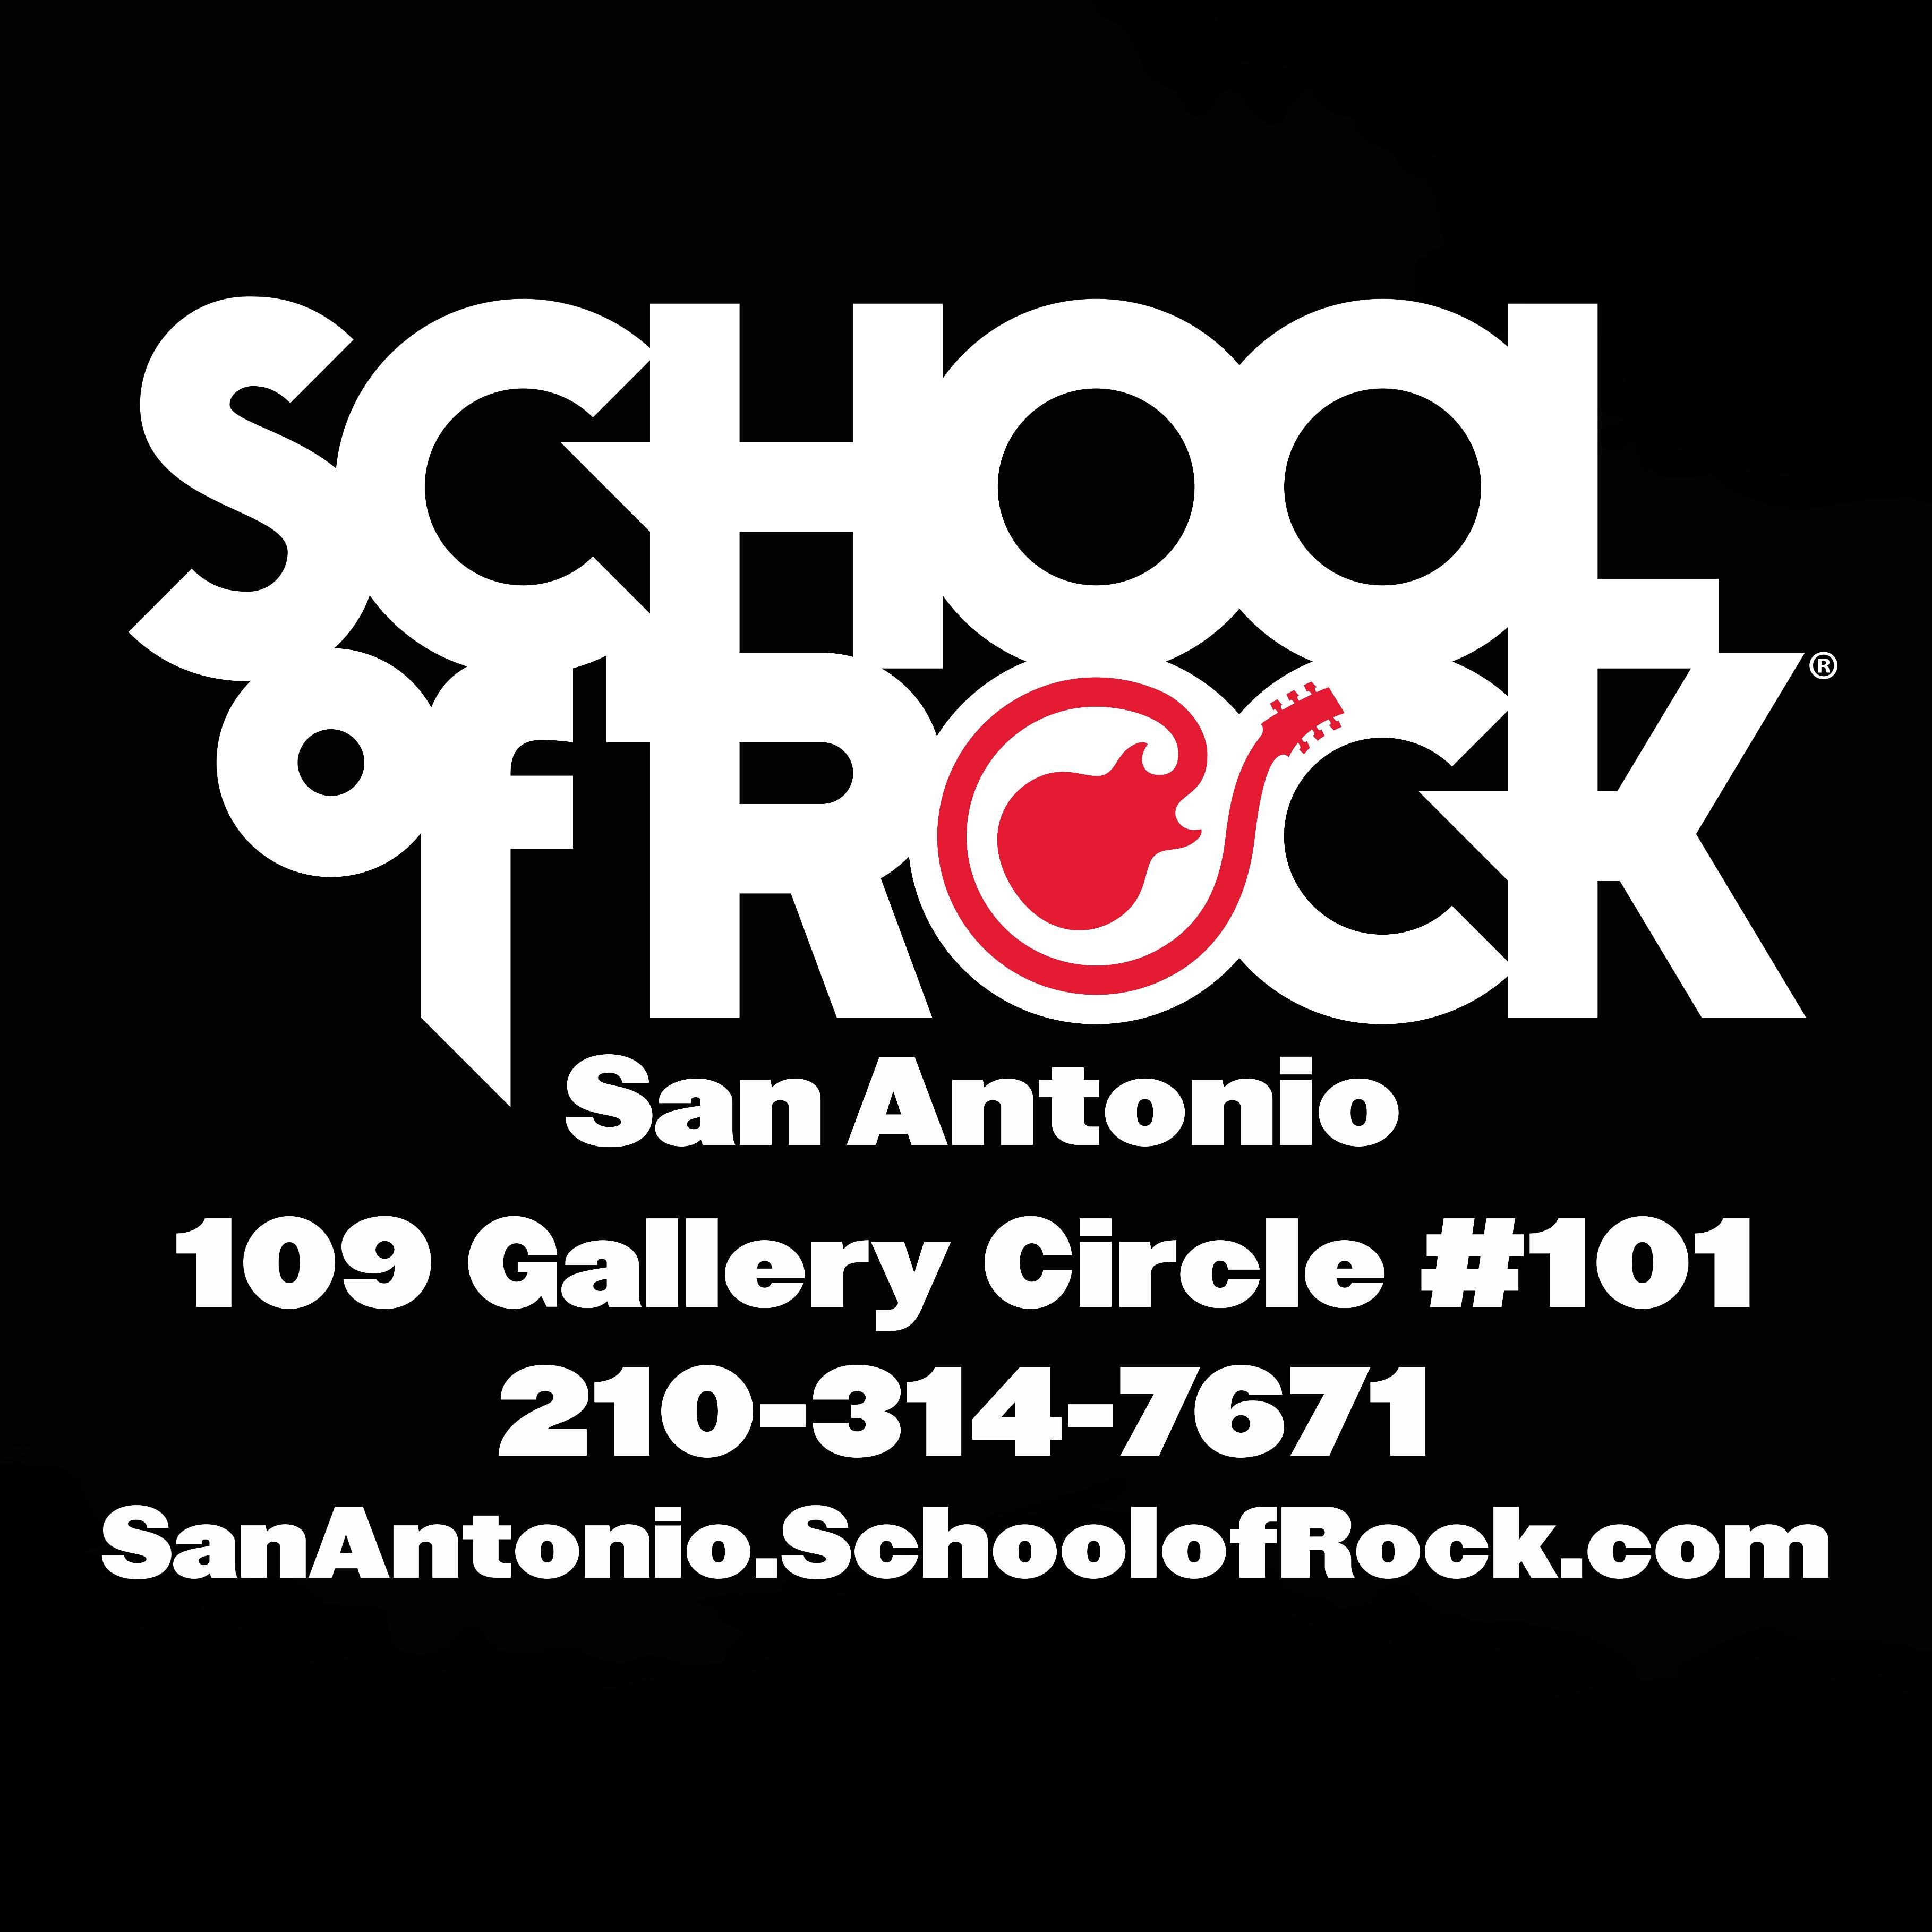 109 Gallery Circle, Suite 101 San Antonio, TX 210-314-7671 #sorsanantonio #sorsatx